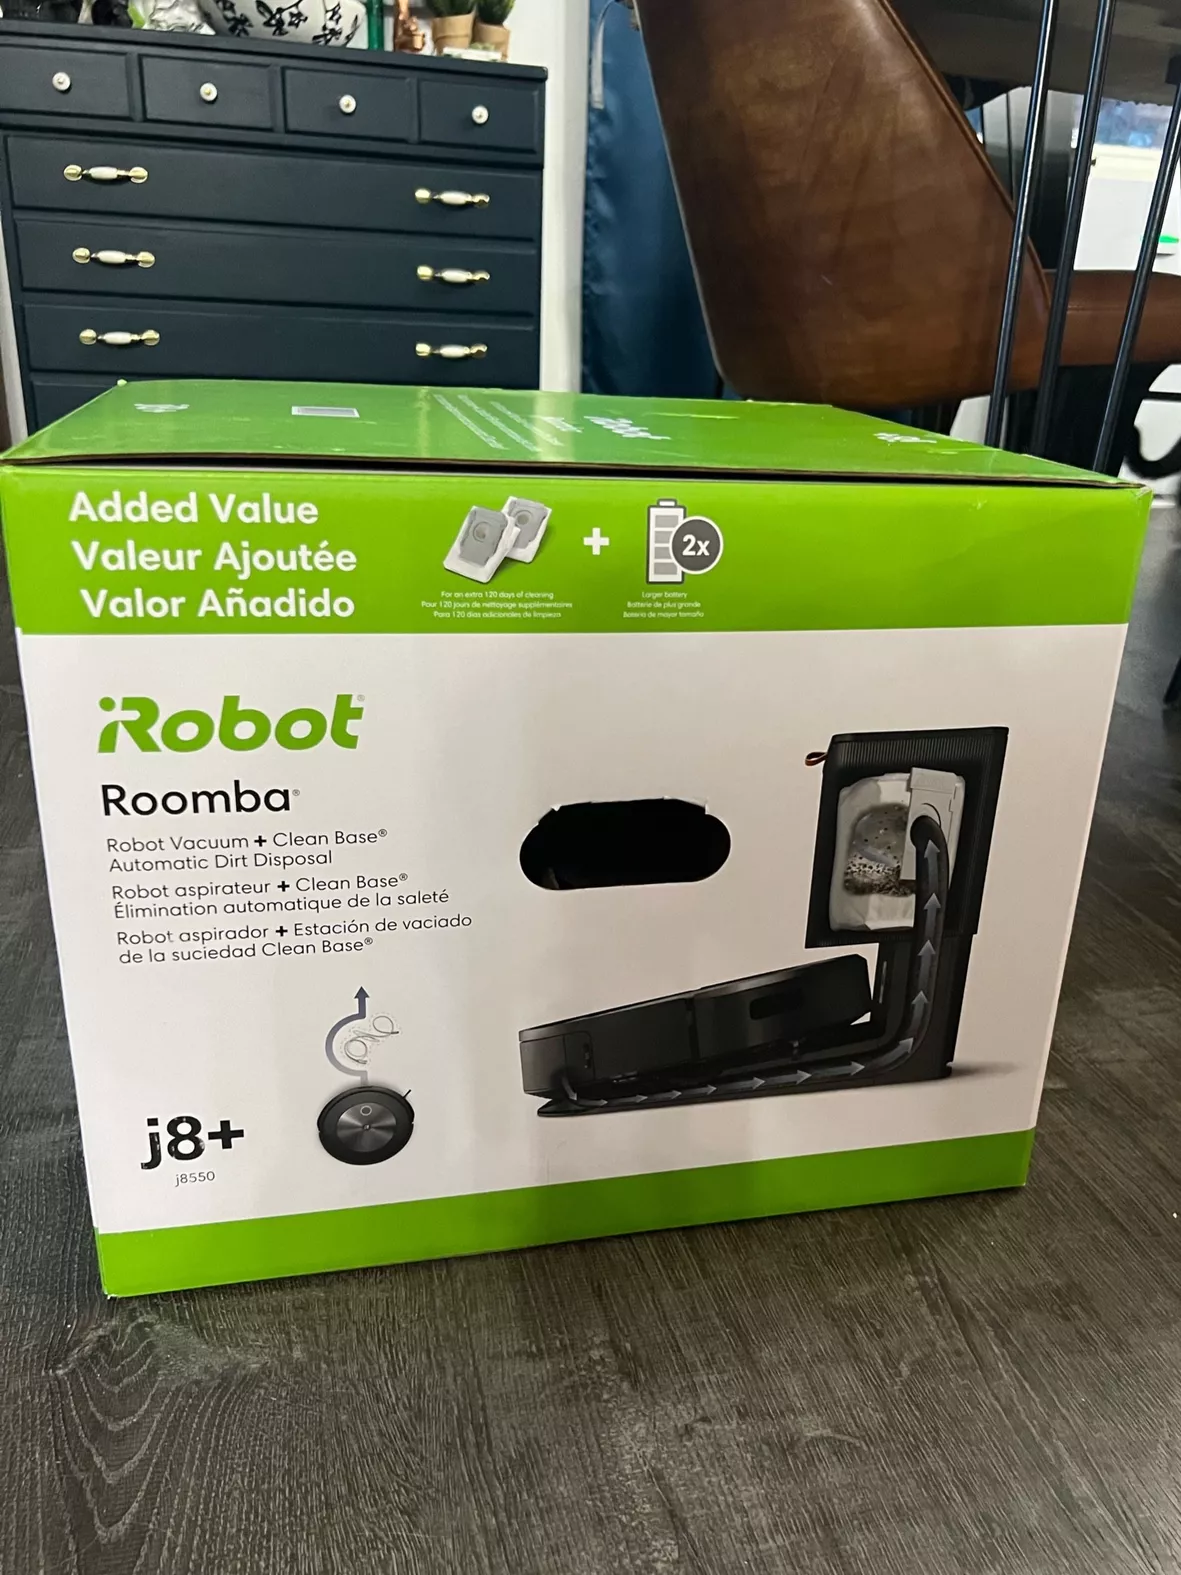 iRobot Roomba j8+ (8550) Wi-Fi Connected Self-Emptying Robot Vacuum